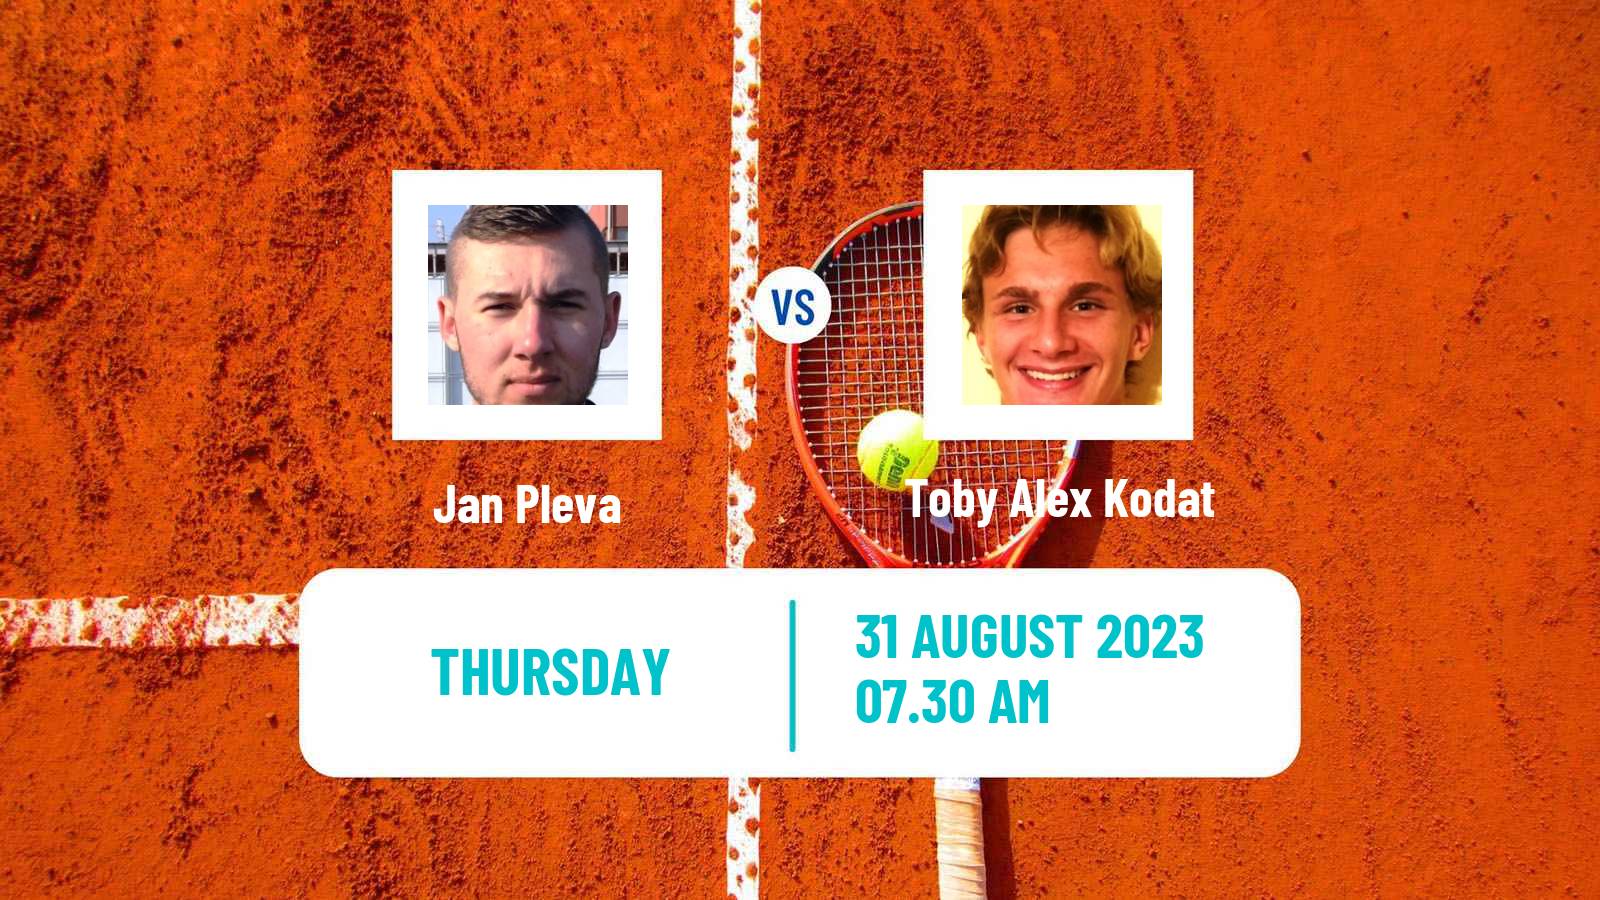 Tennis ITF M25 Jablonec Nad Nisou 2 Men Jan Pleva - Toby Alex Kodat